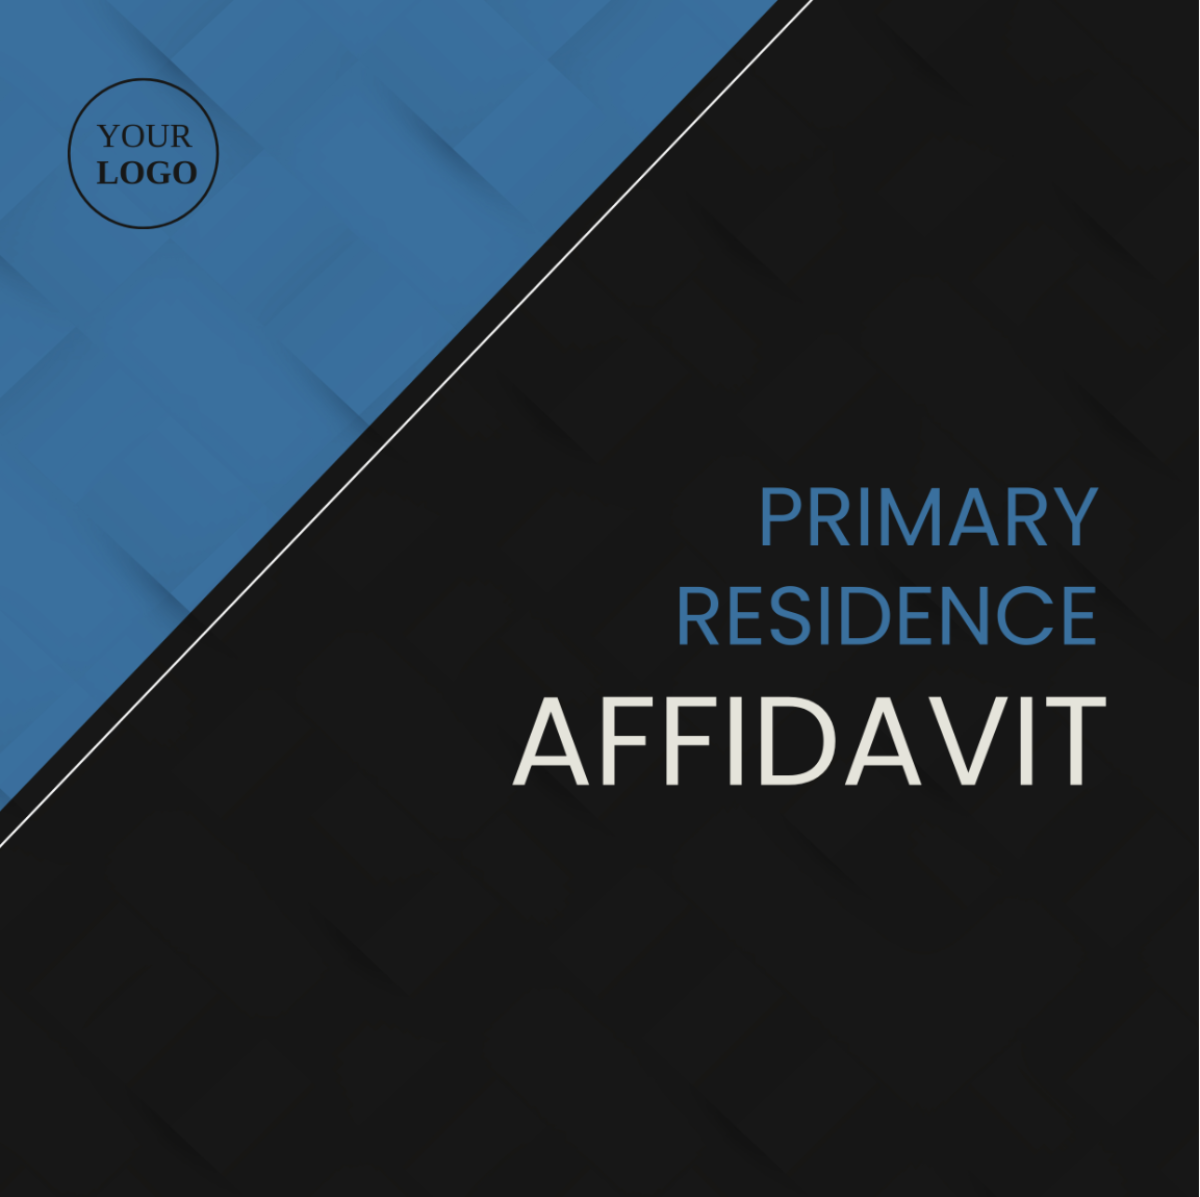 Primary Residence Affidavit Template